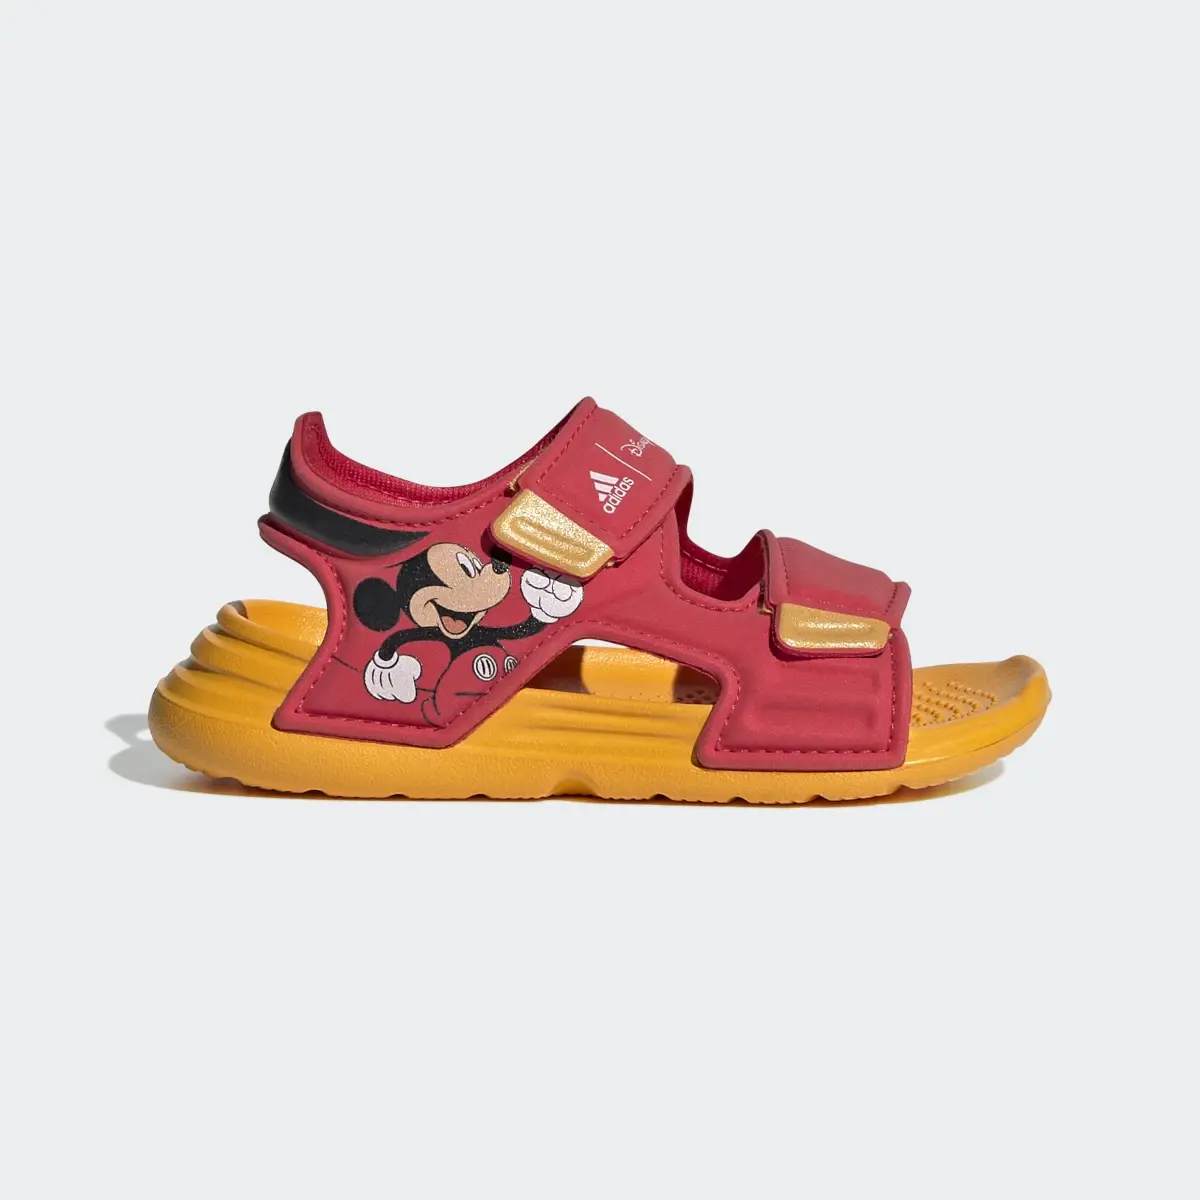 Adidas x Disney Mickey Mouse AltaSwim Sandals. 2